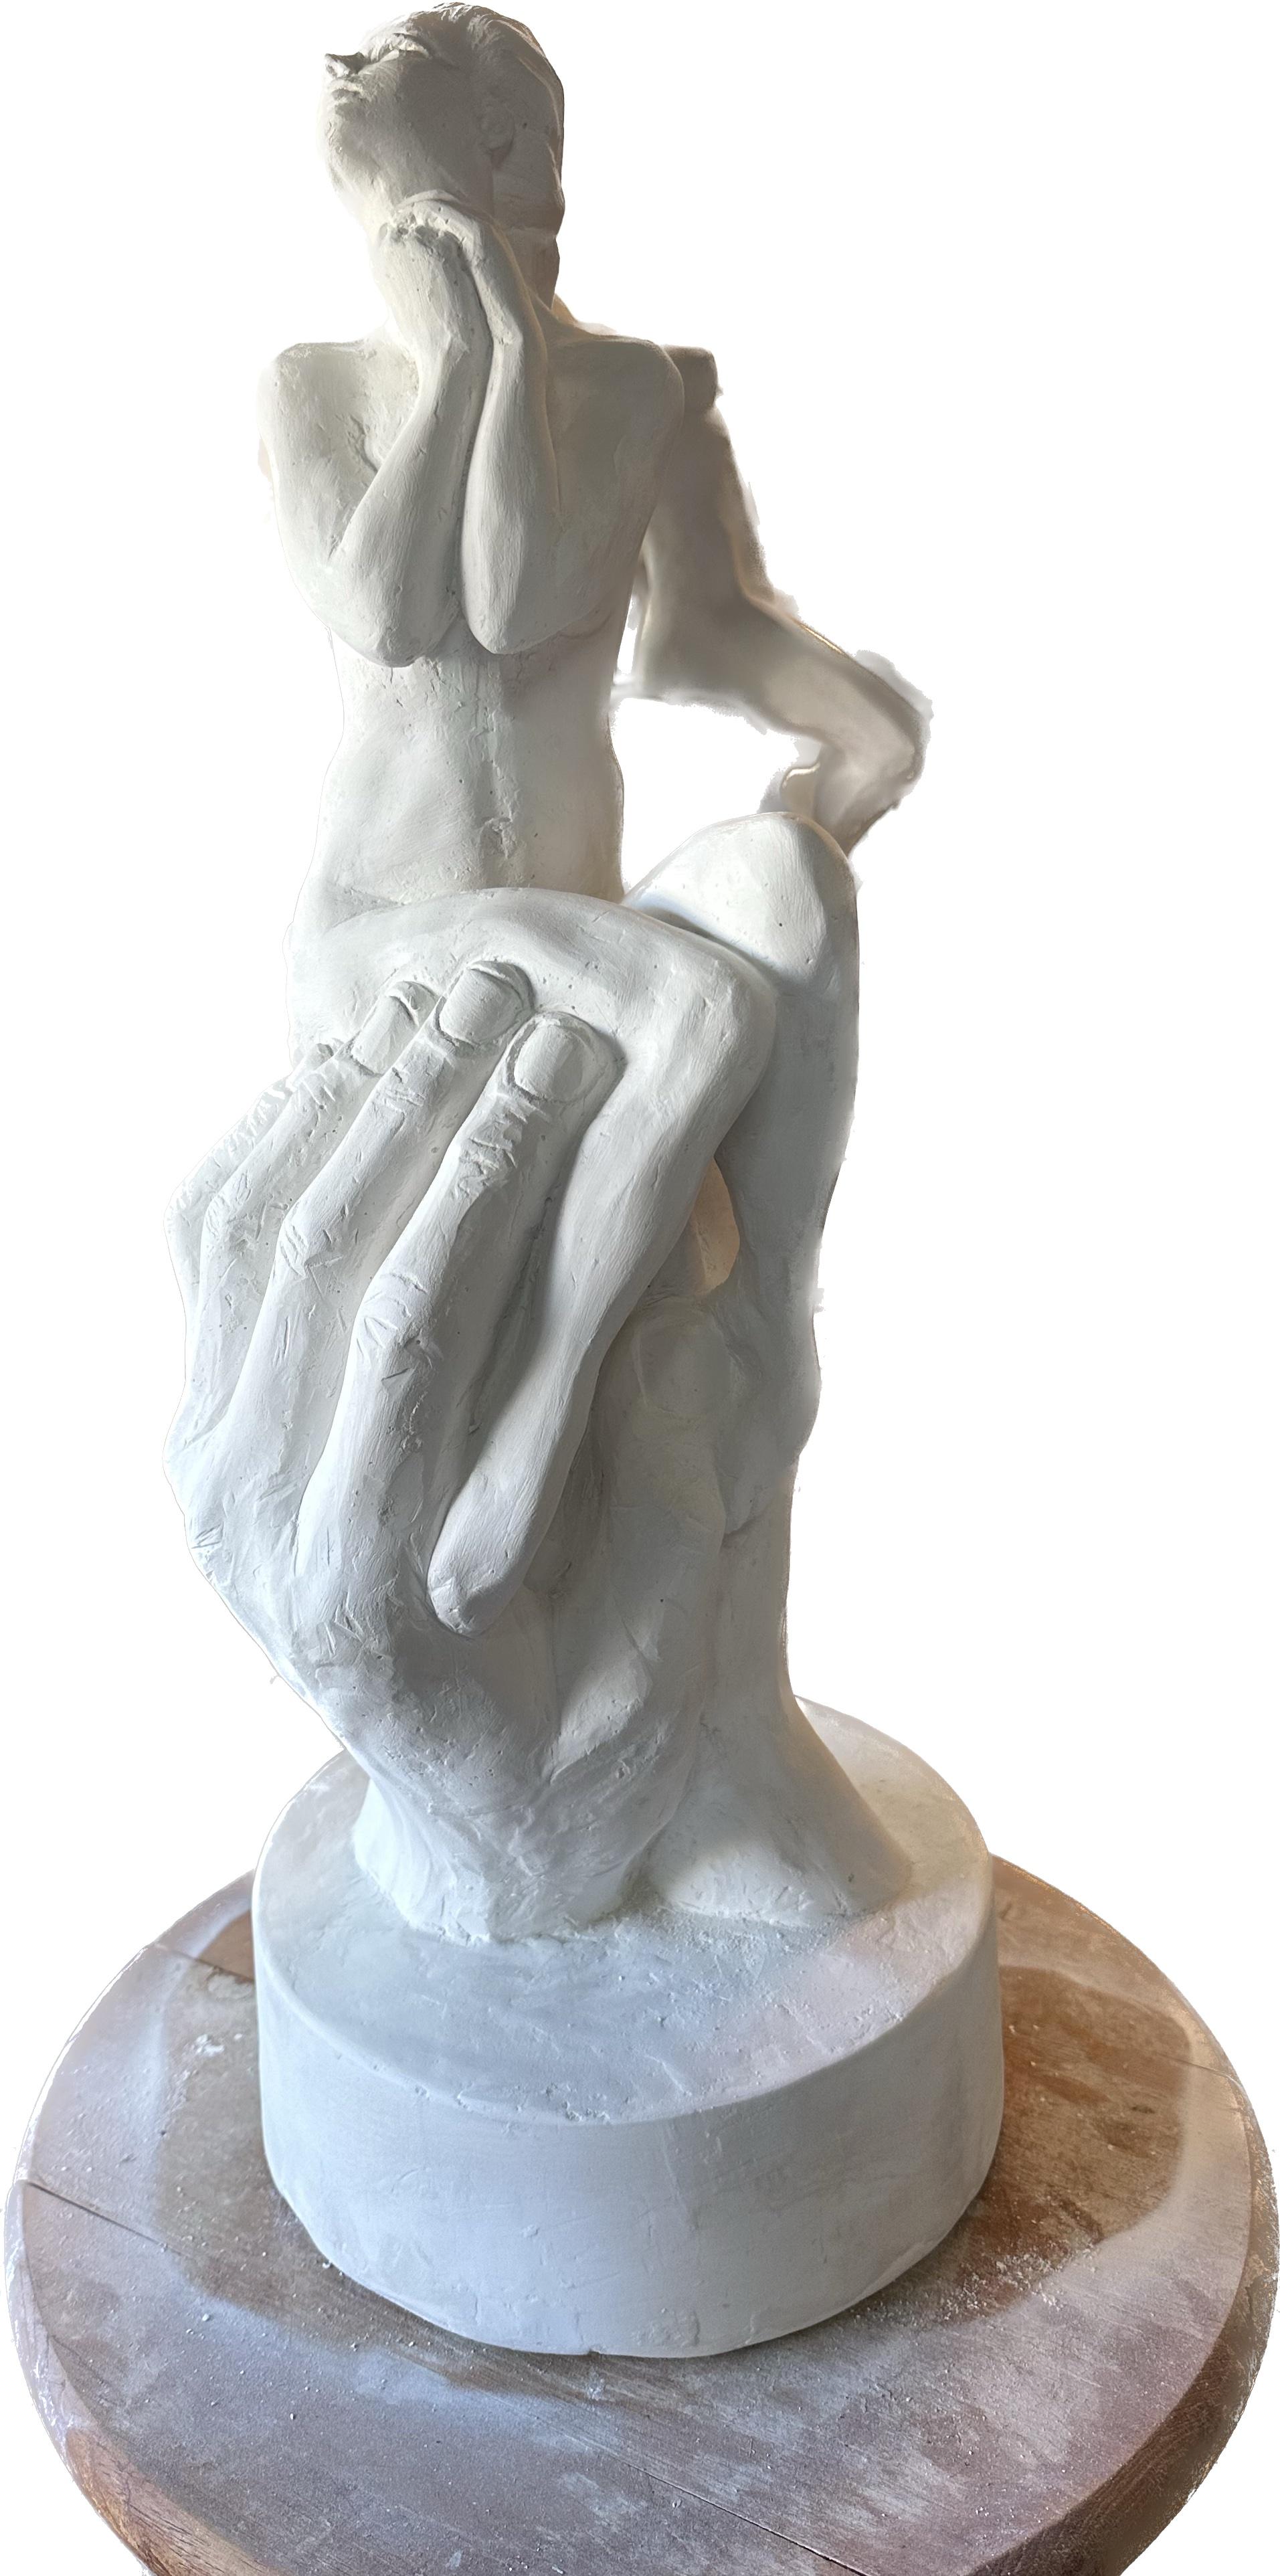 Karapet Balakeseryan  (Garo) Figurative Sculpture - Hope, Sculpture, Hydro Stone, Dust Marble Handmade by Garo, One of a kind